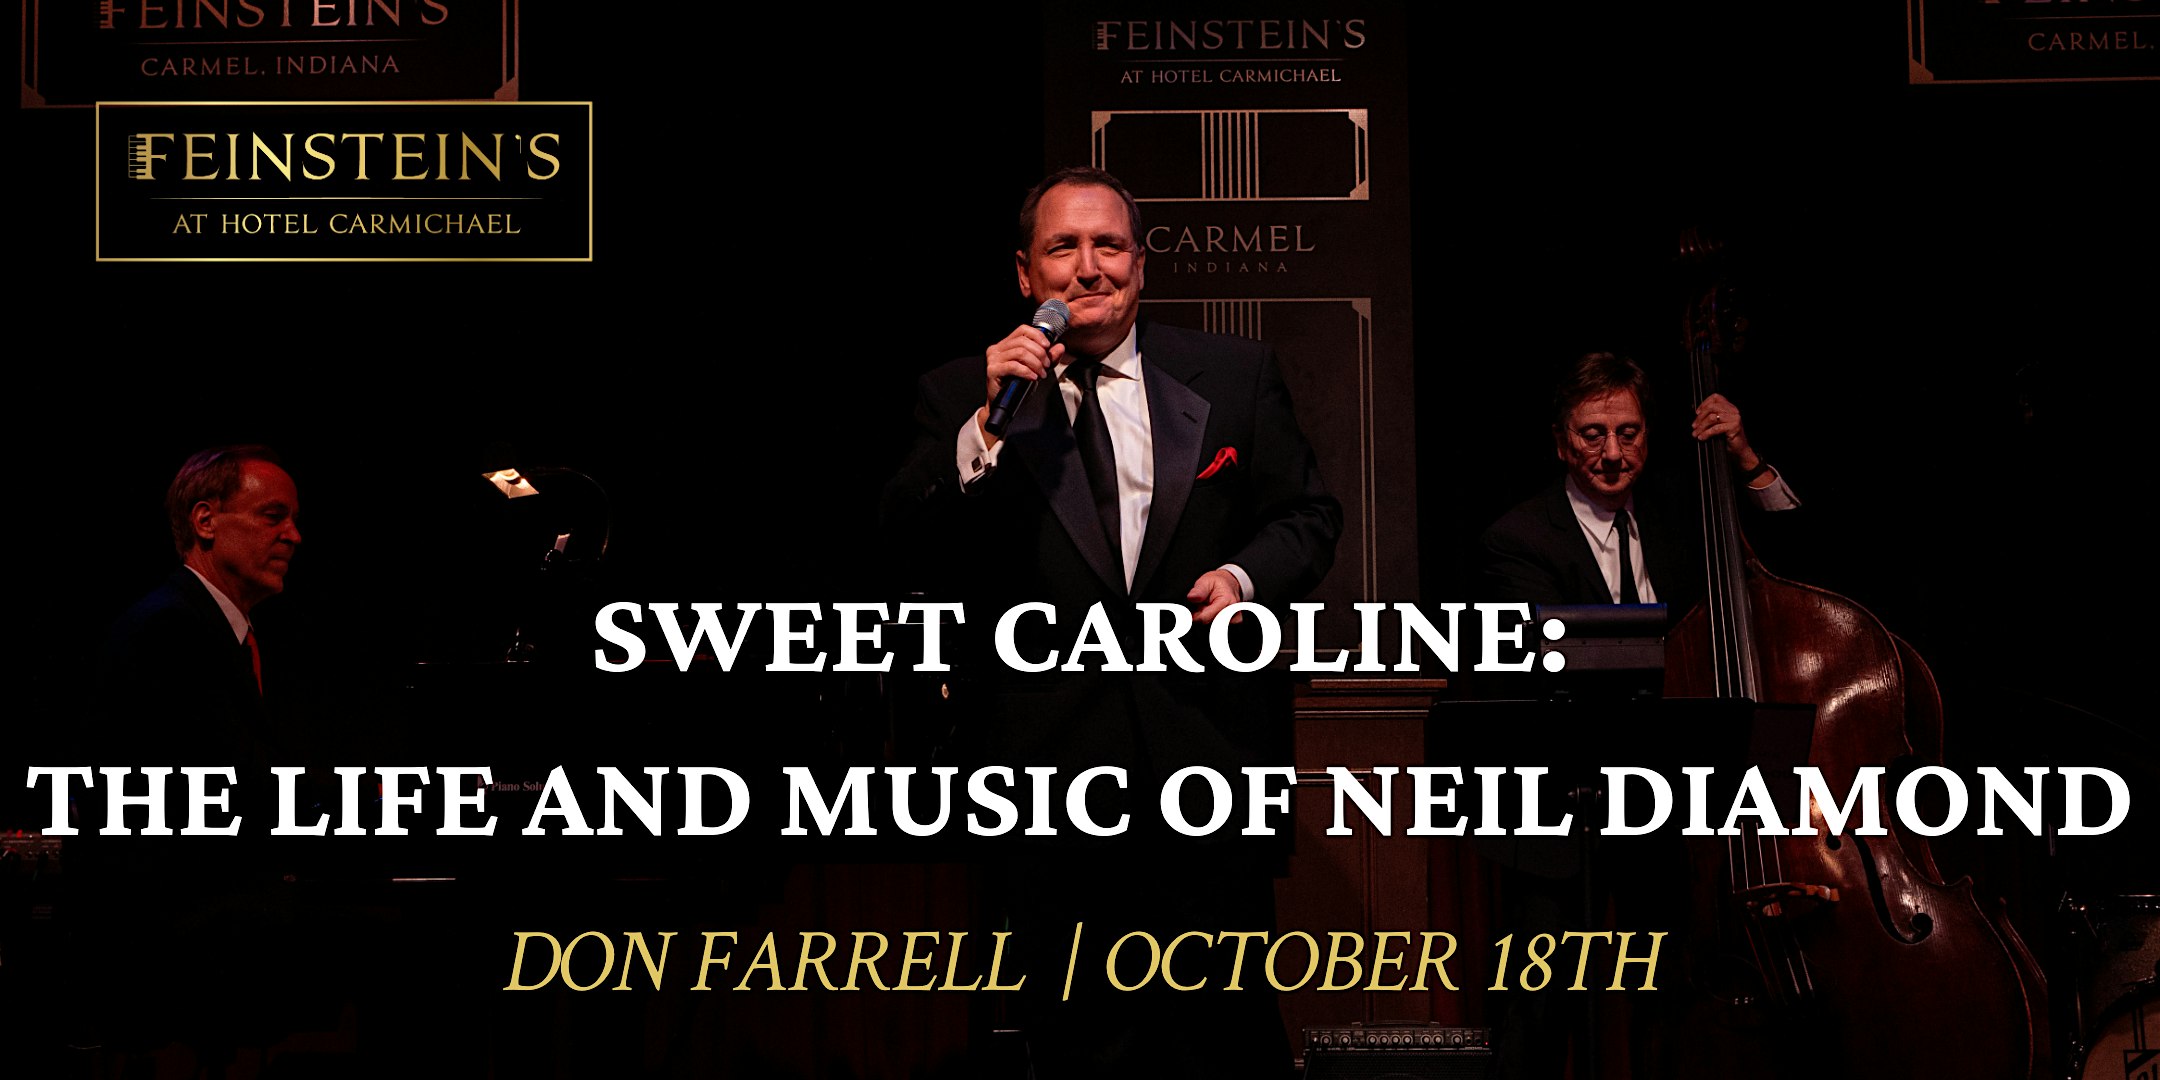 SWEET CAROLINE - The Life and Music of Neil Diamond